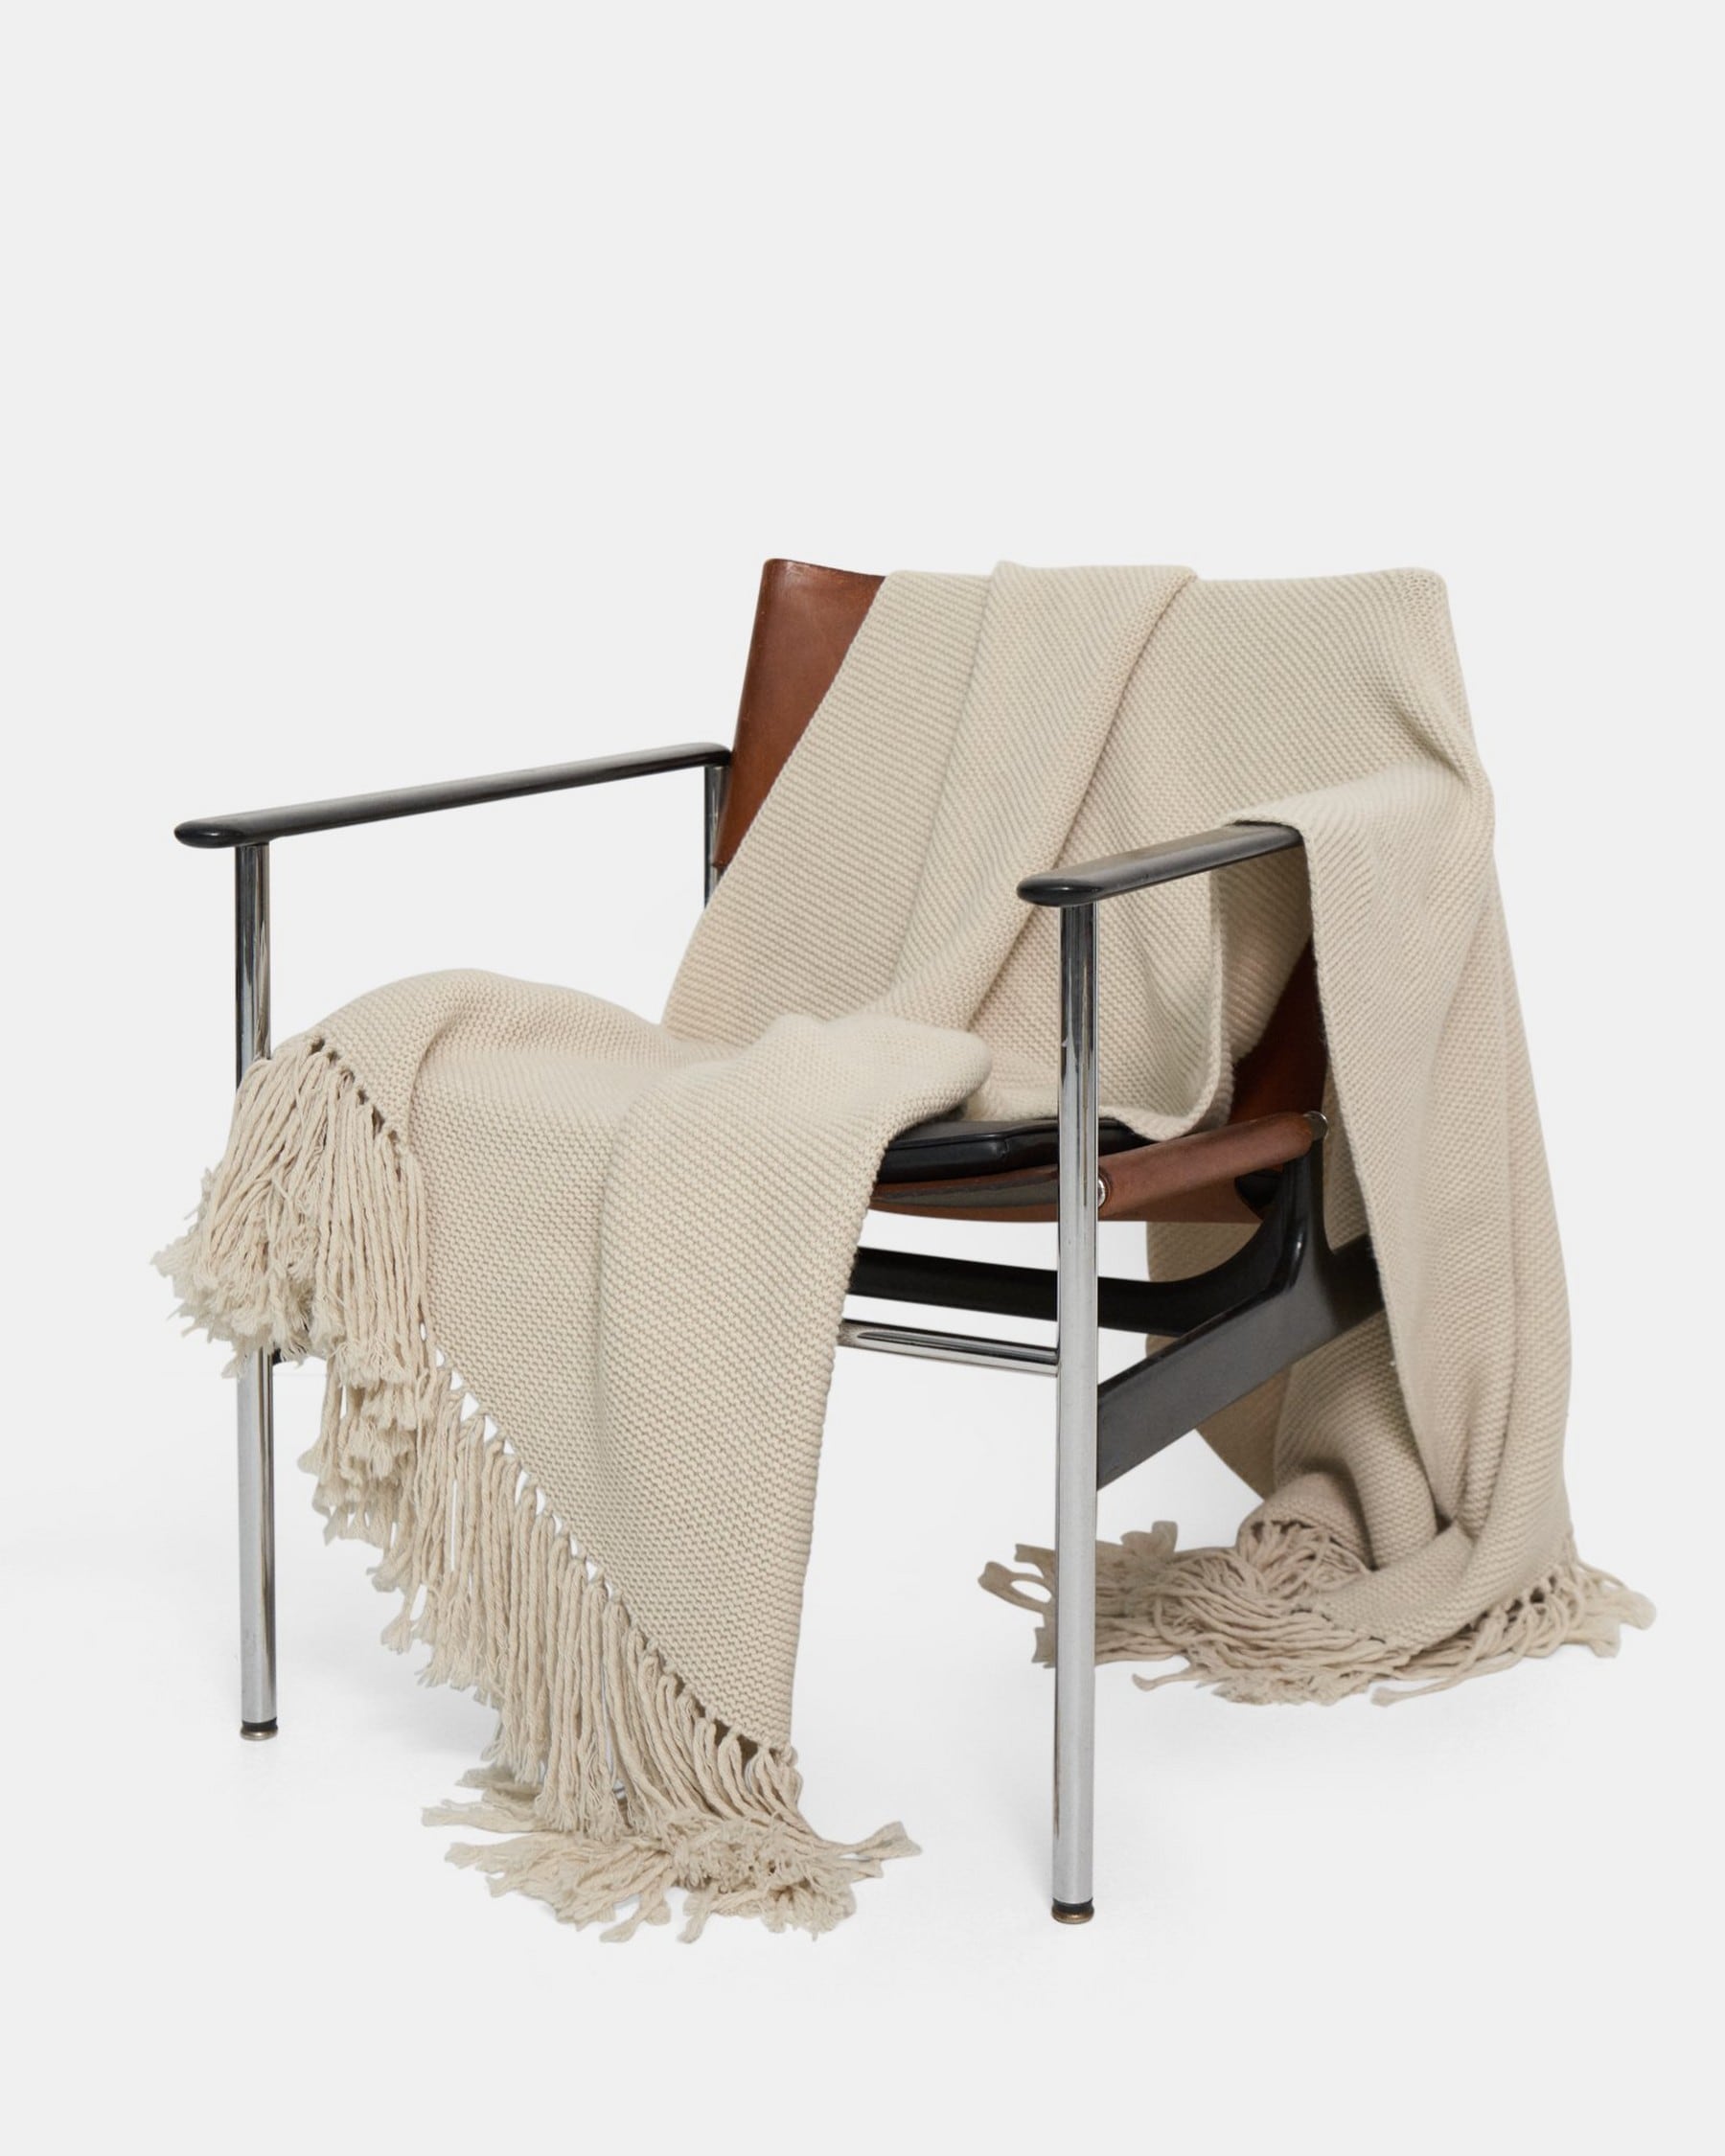 Fringe Blanket Scarf in Felted Wool-Cashmere